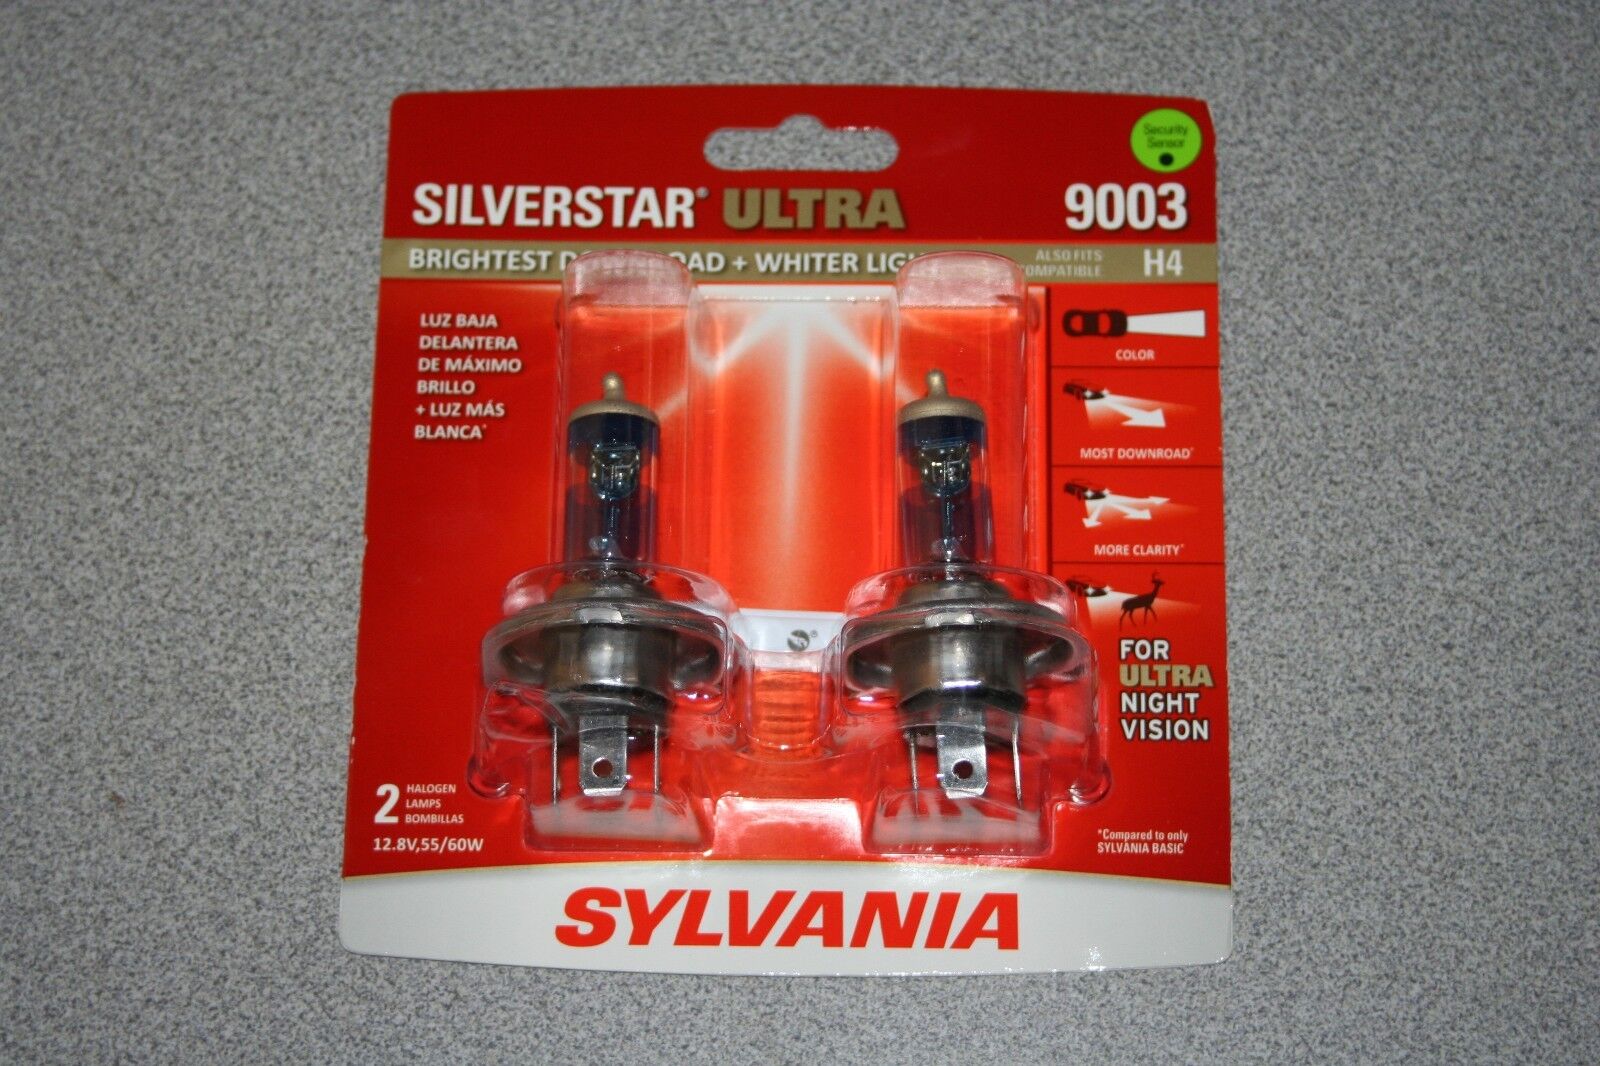 Sylvania Silverstar ULTRA 9003/H4 Pair Set High Performance Headlight Bulbs NEW